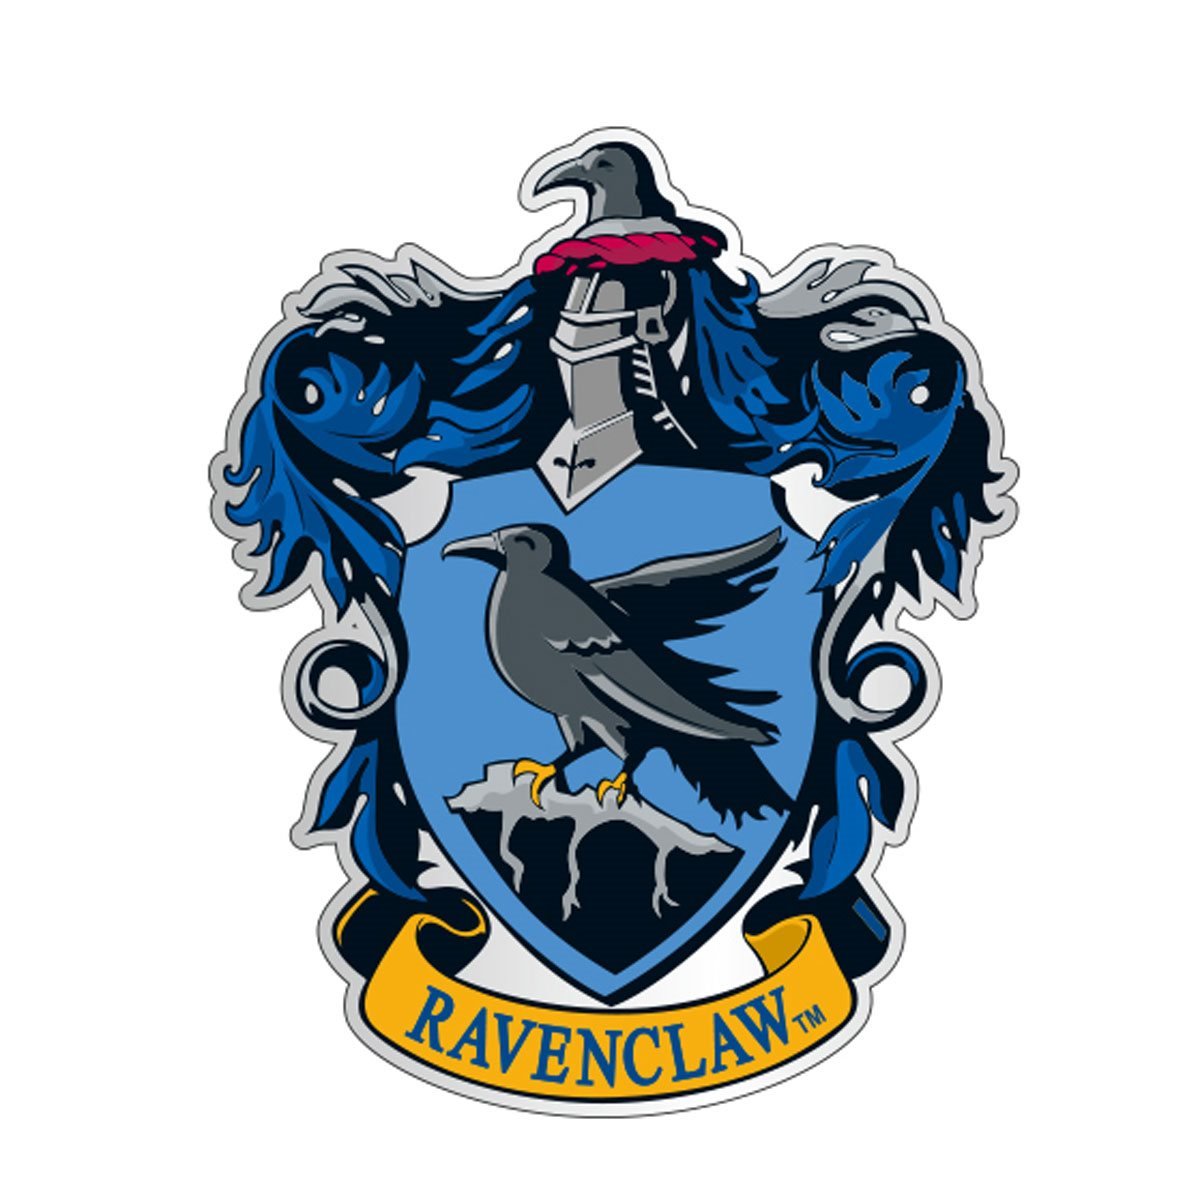 Download Harry Potter Ravenclaw Crest Ravenclaw Logo PNG Image with No  Background - PNGkey.com